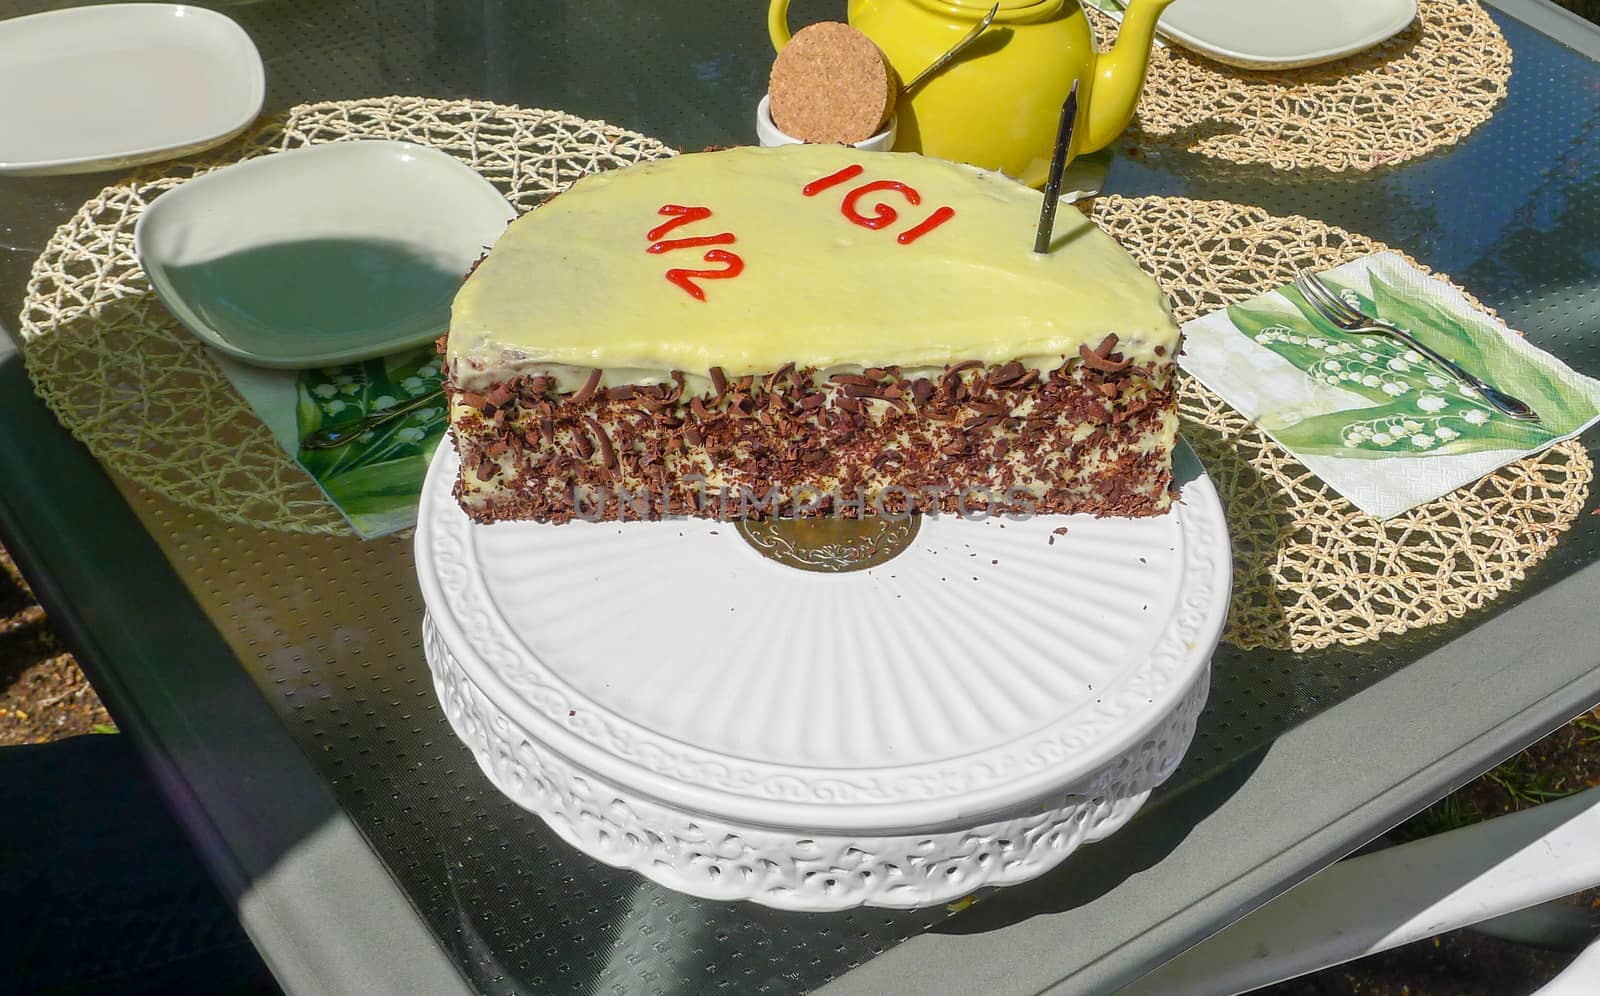 Half Year Chocolate Birthday Cake by wit_gorski